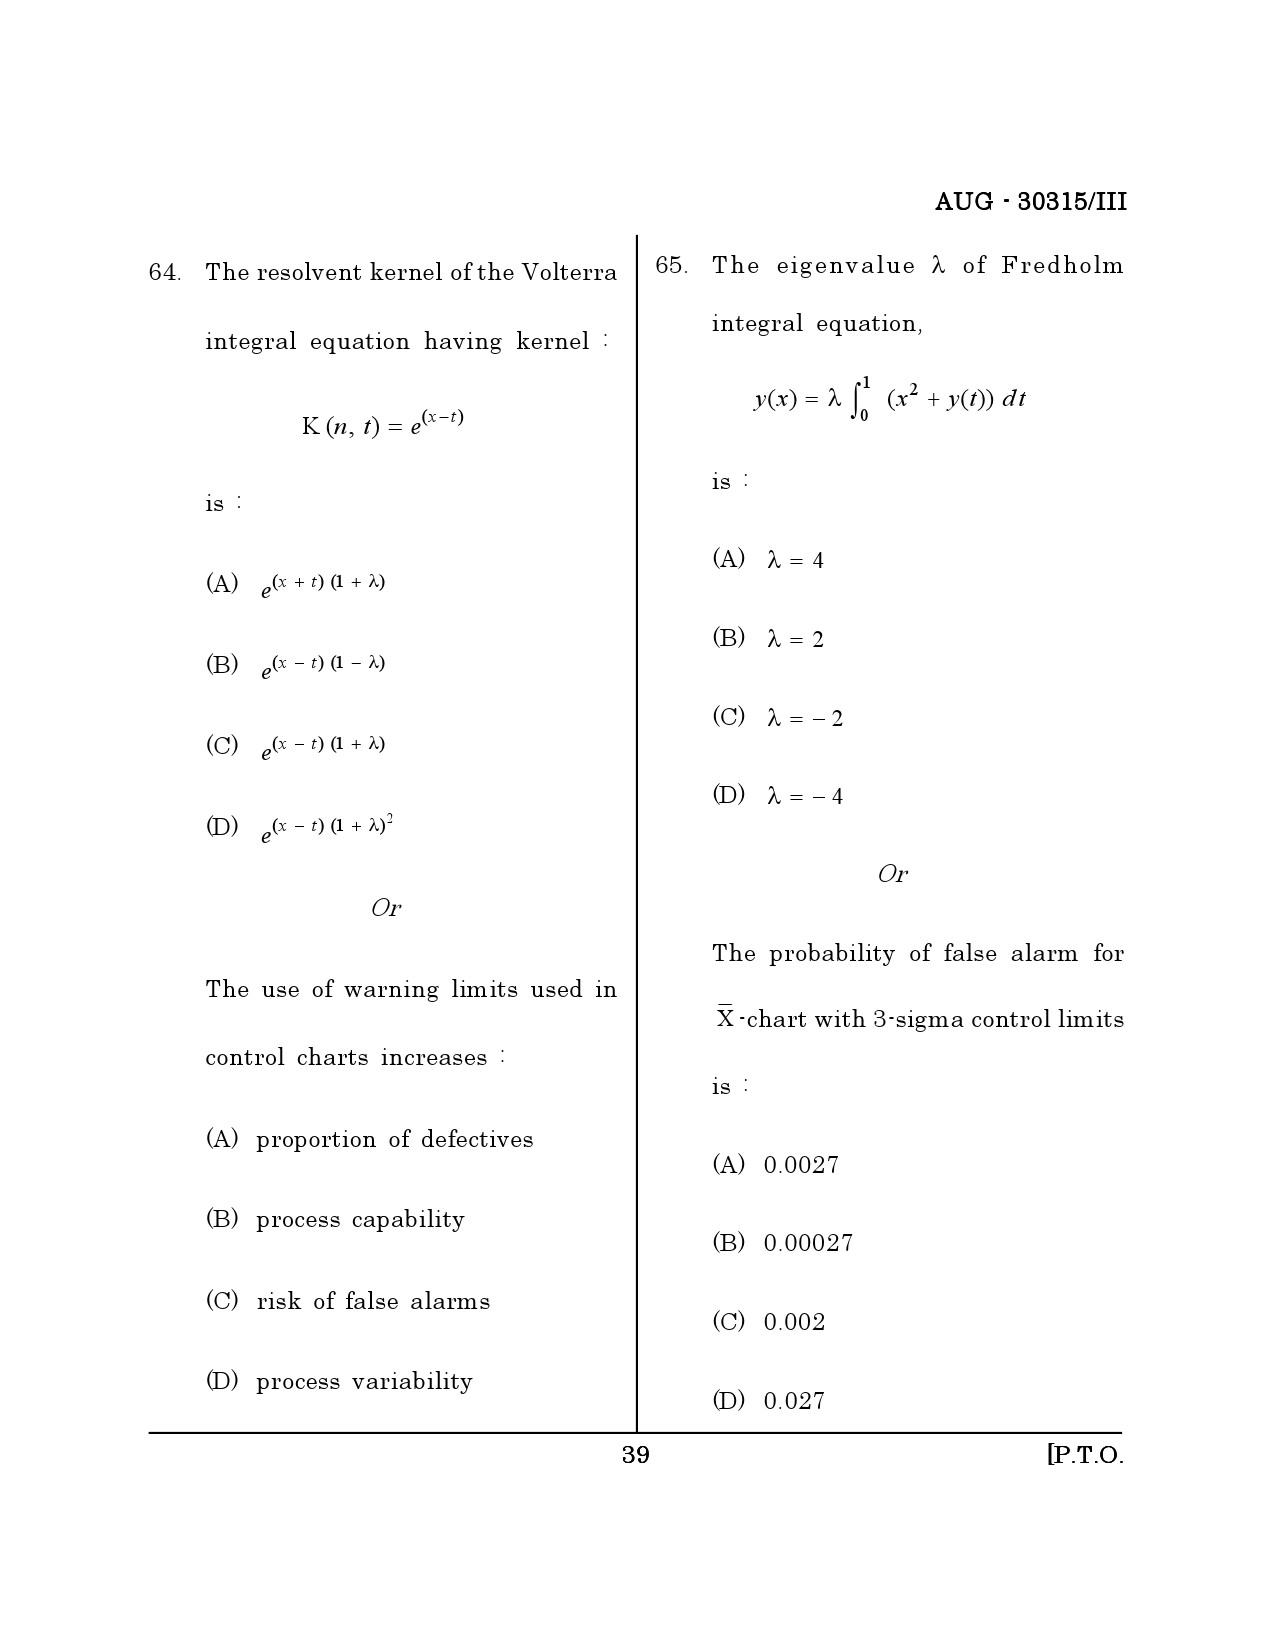 Maharashtra SET Mathematical Sciences Question Paper III August 2015 38